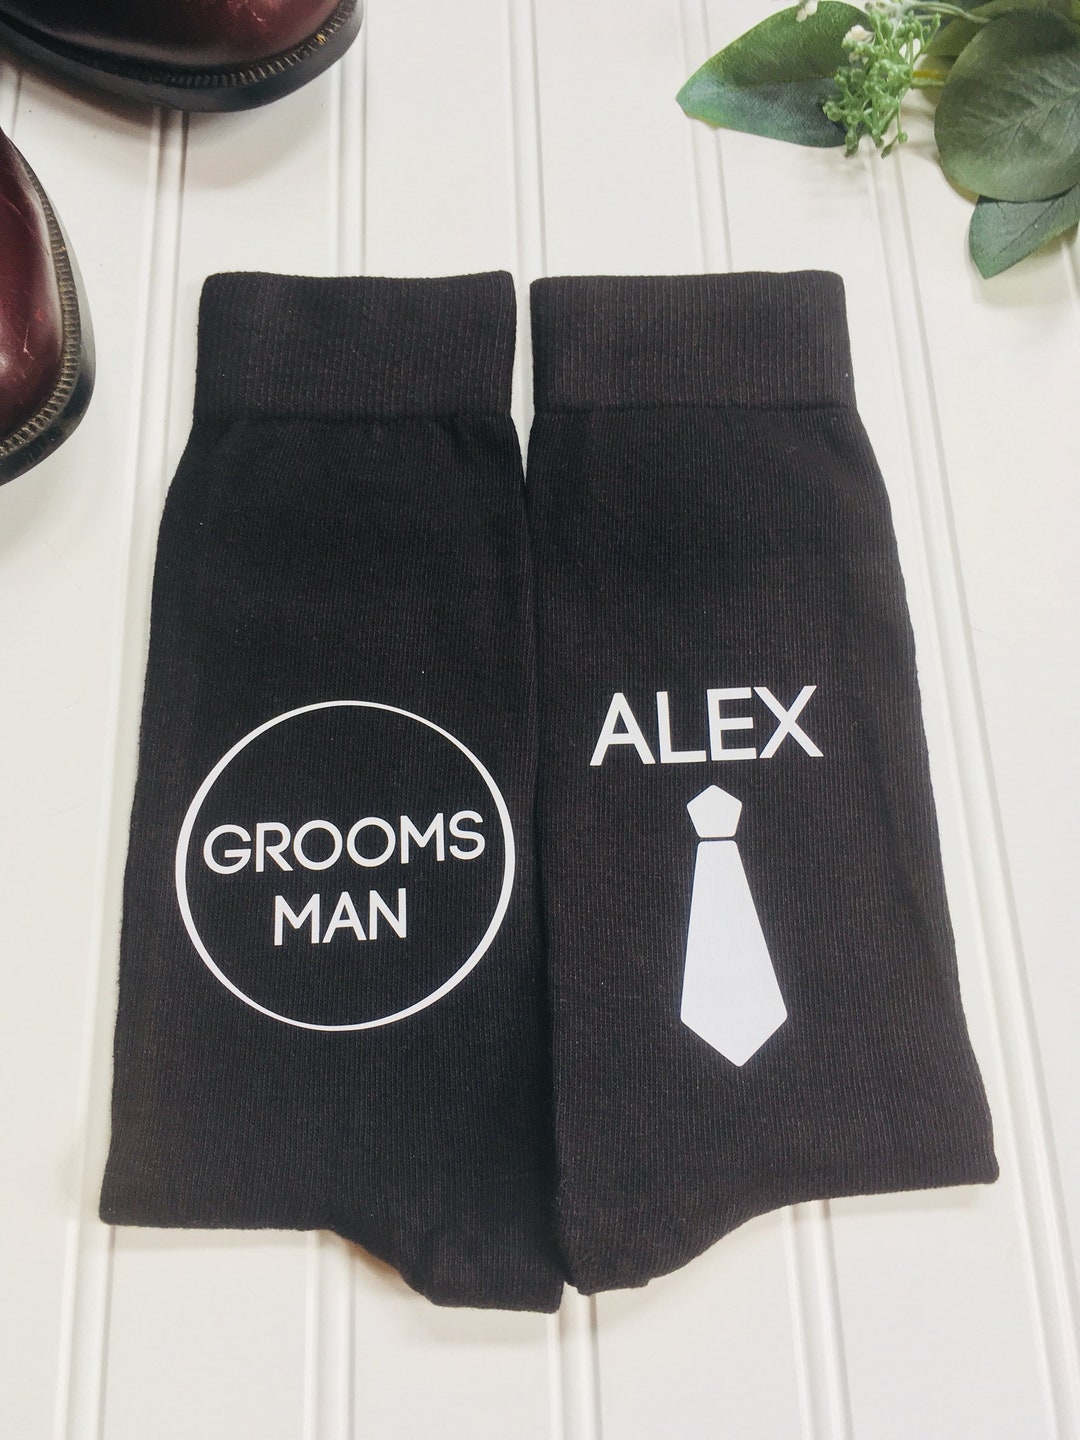 Wedding Party Gift Personalized Groomsman Gift Groomsmen - Etsy